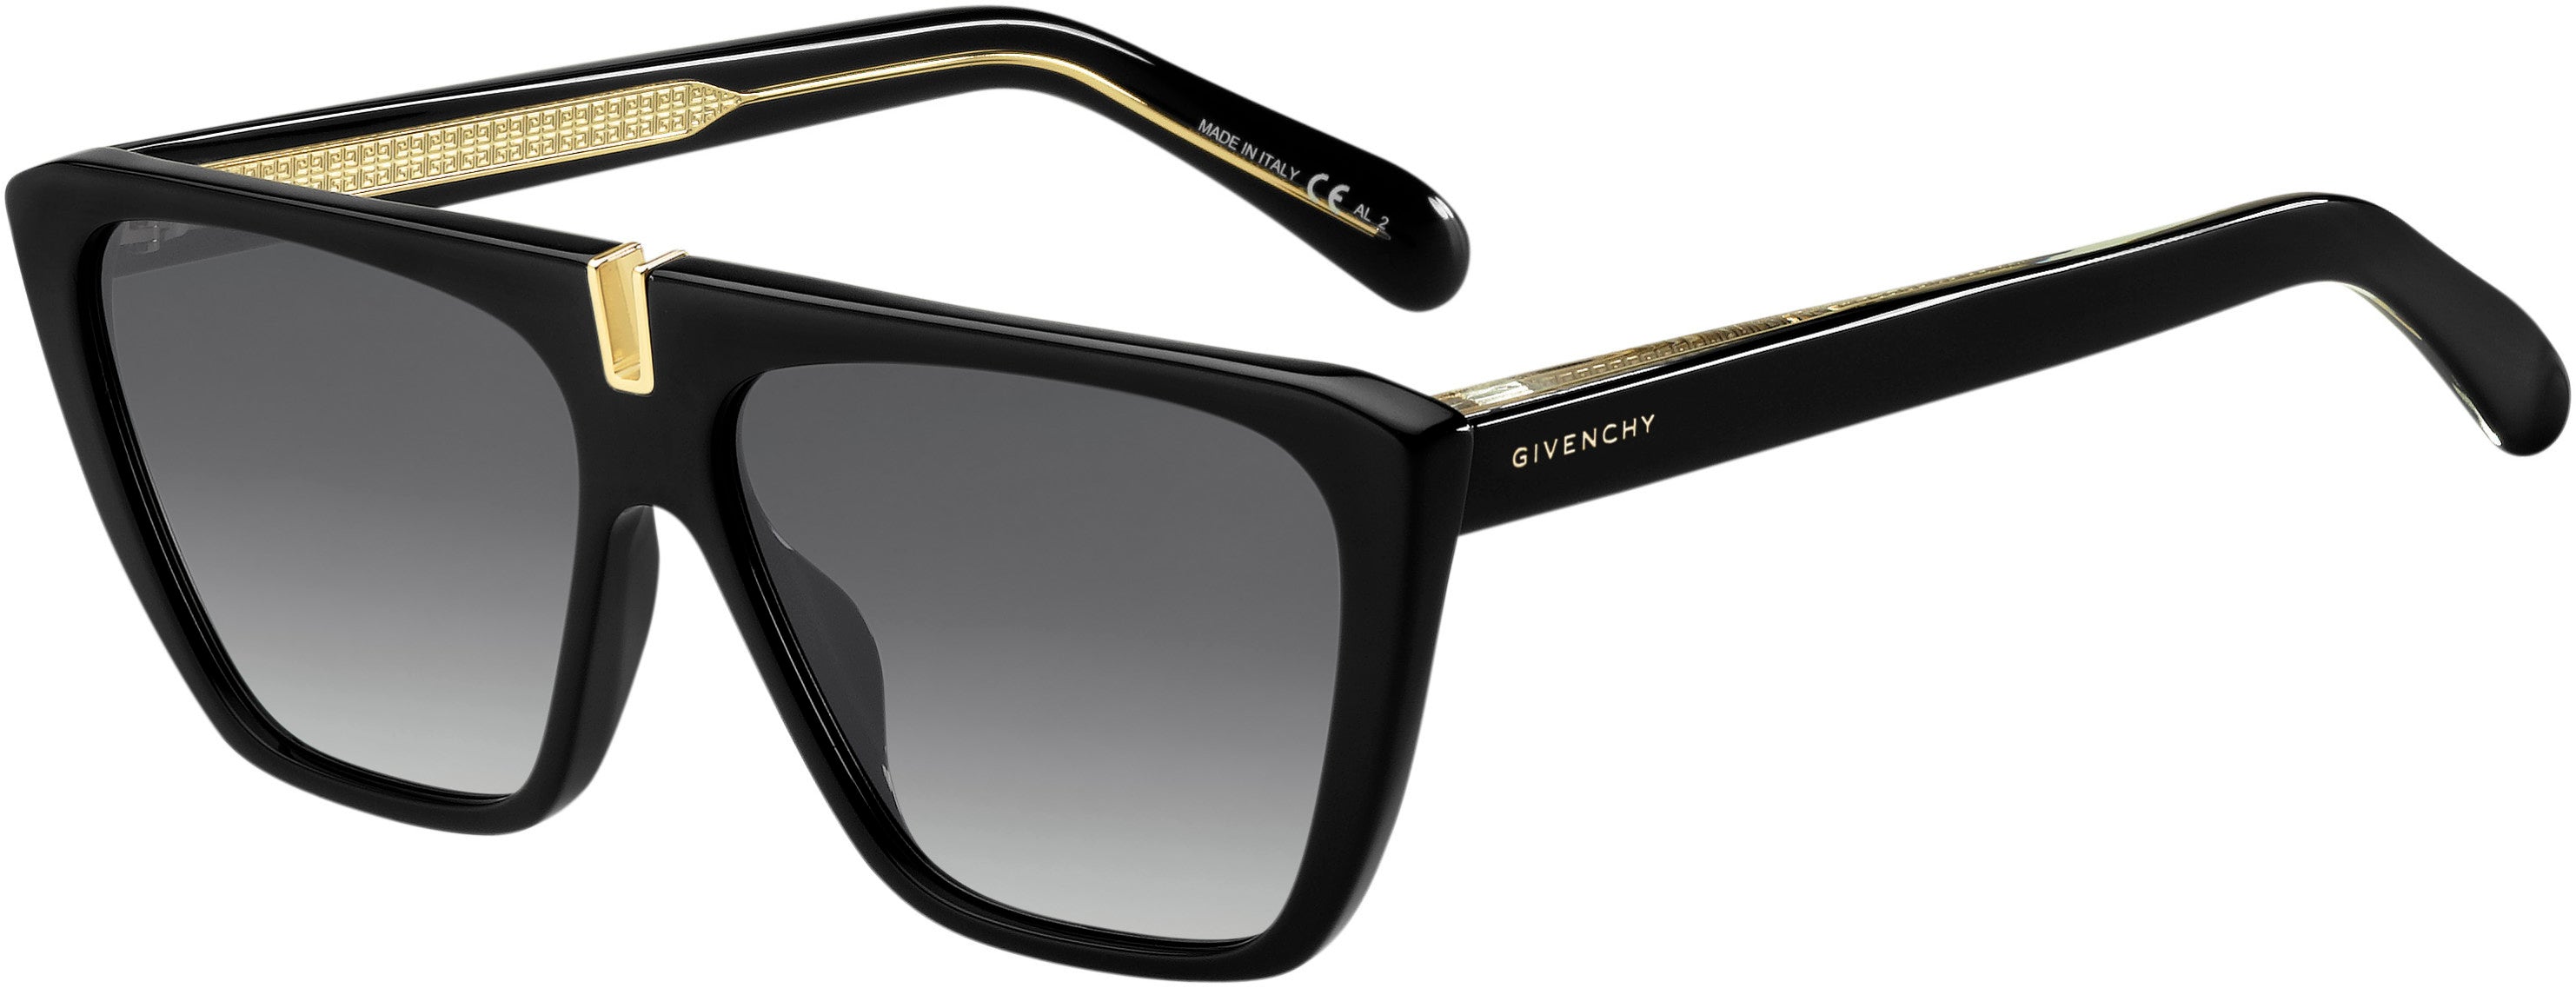  Givenchy 7109/S Square Sunglasses 0807-0807  Black (9O Dark Gray Gradient)